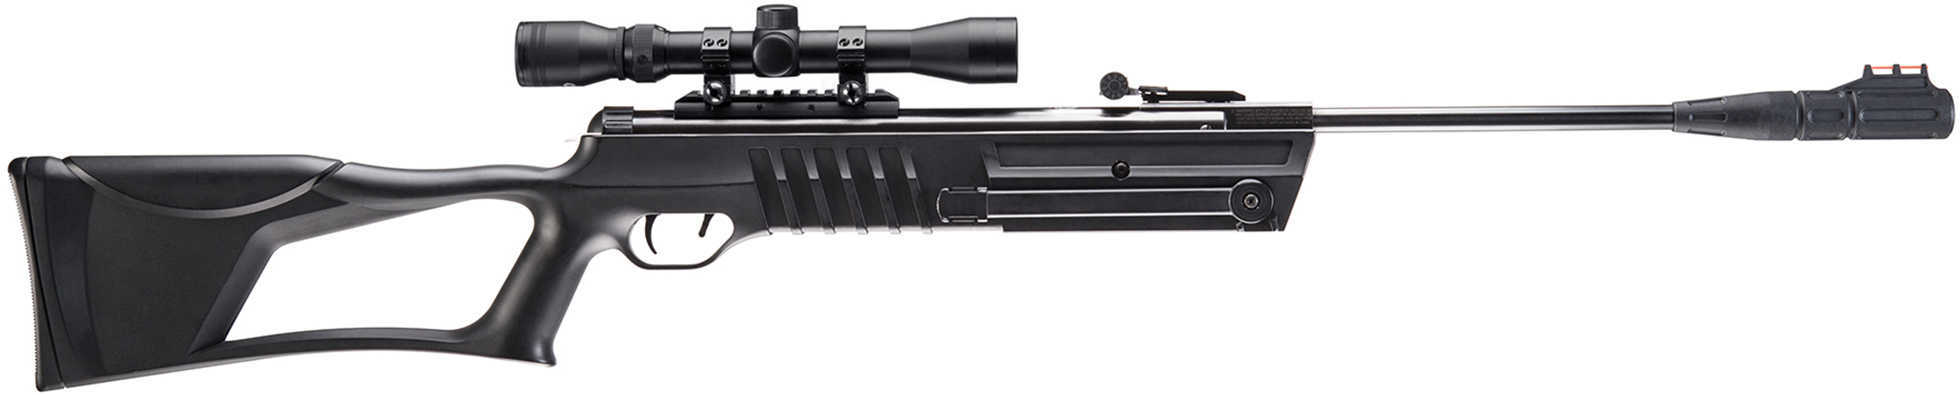 Umarex Fuel Combo 3-9X32mm .177 Caliber Airgun Md: 2251313